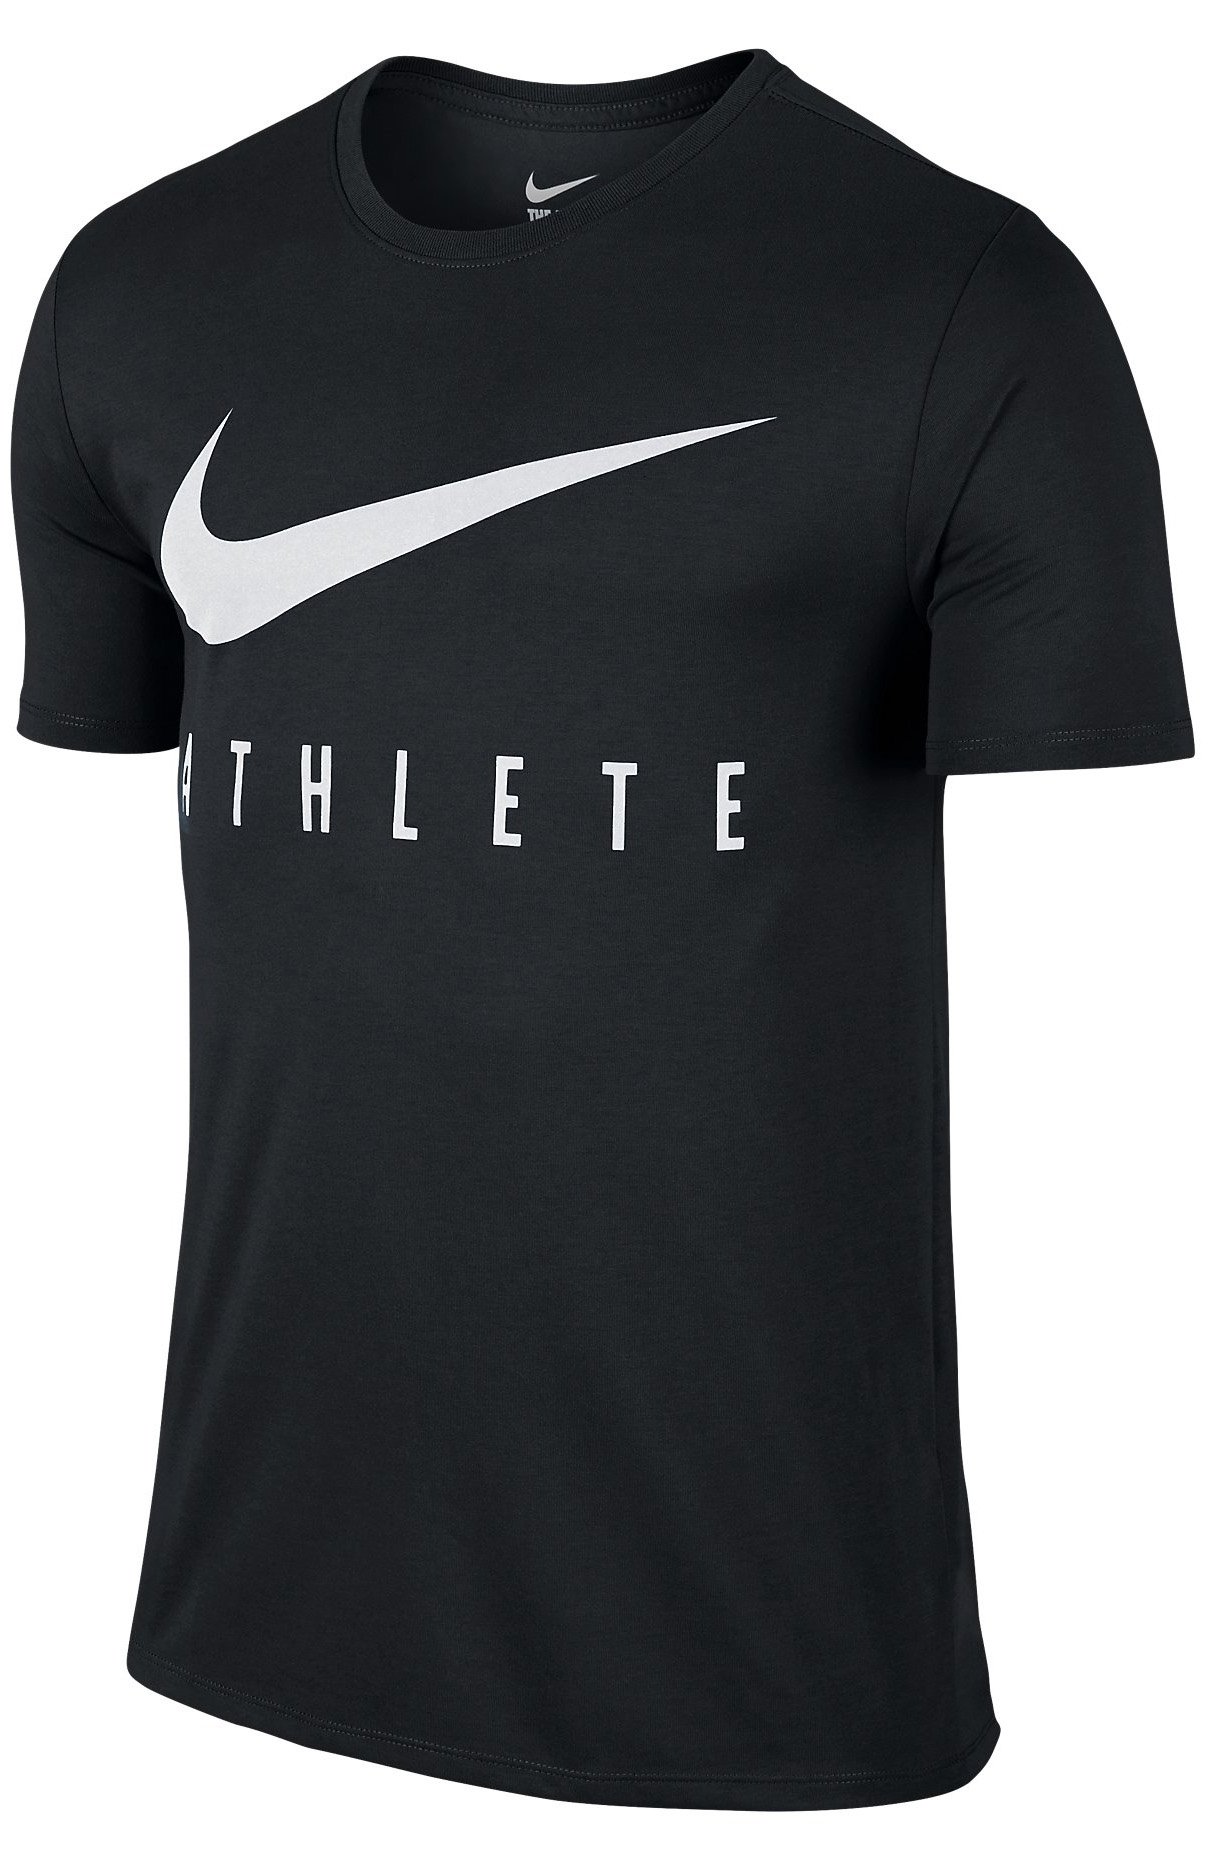 Pánské tričko Nike Swoosh Athlete Tee